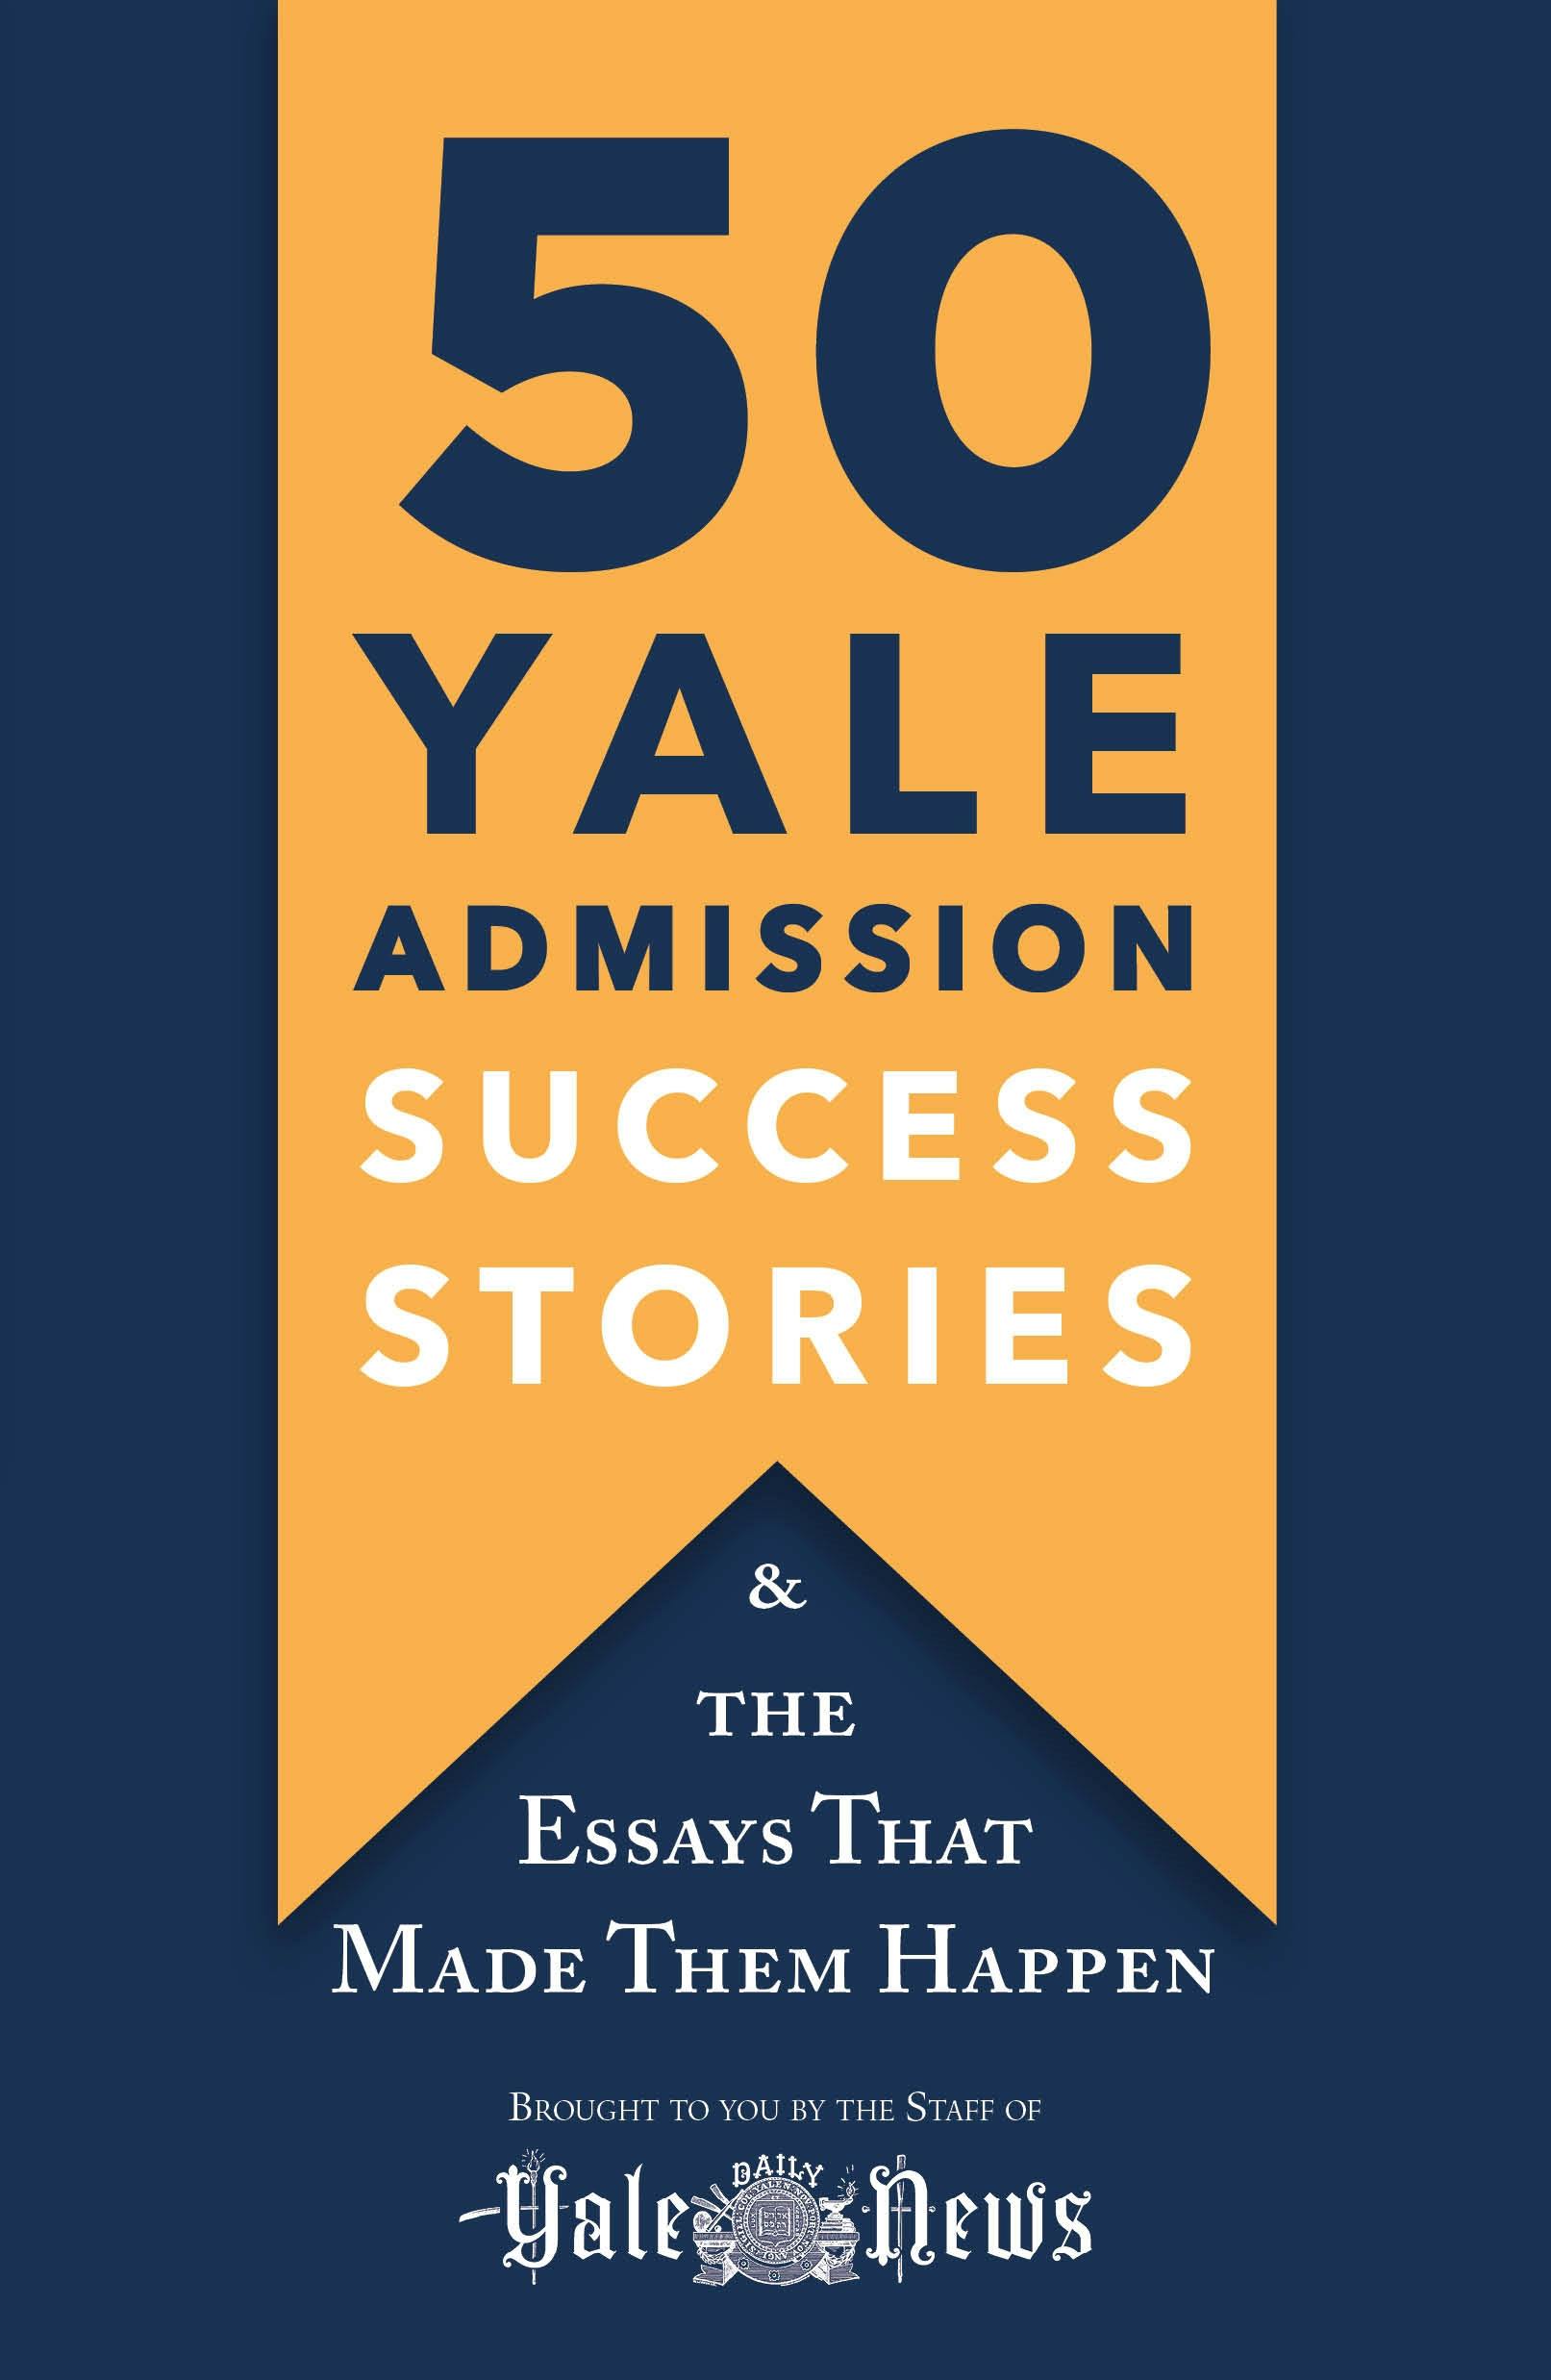 New book ignites society debate - Yale Daily News